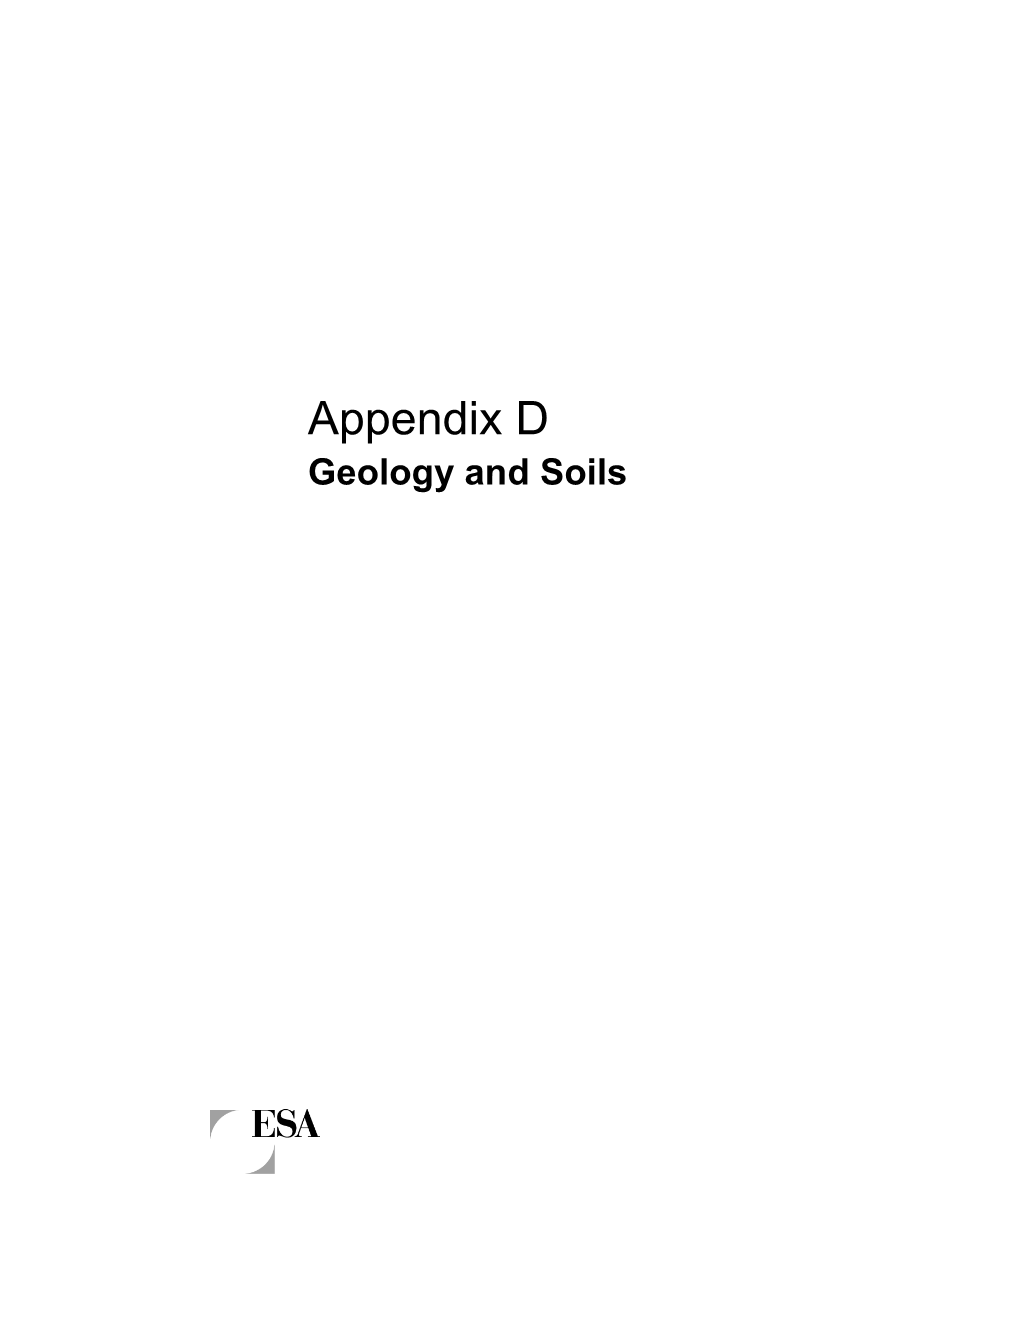 Appendix D (Geology)